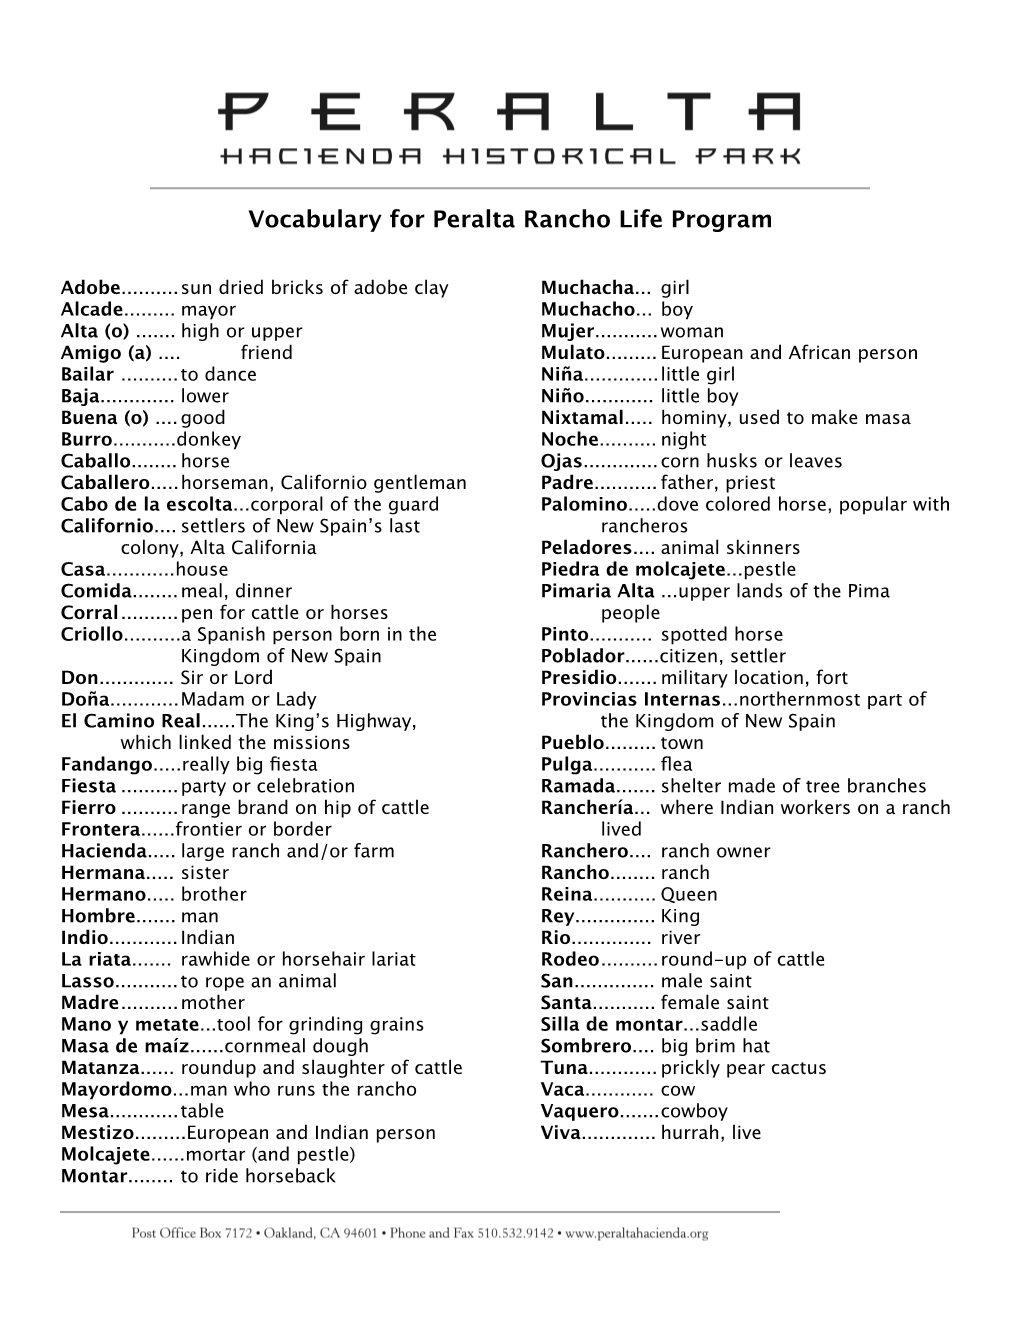 Vocabulary for Peralta Rancho Life Program